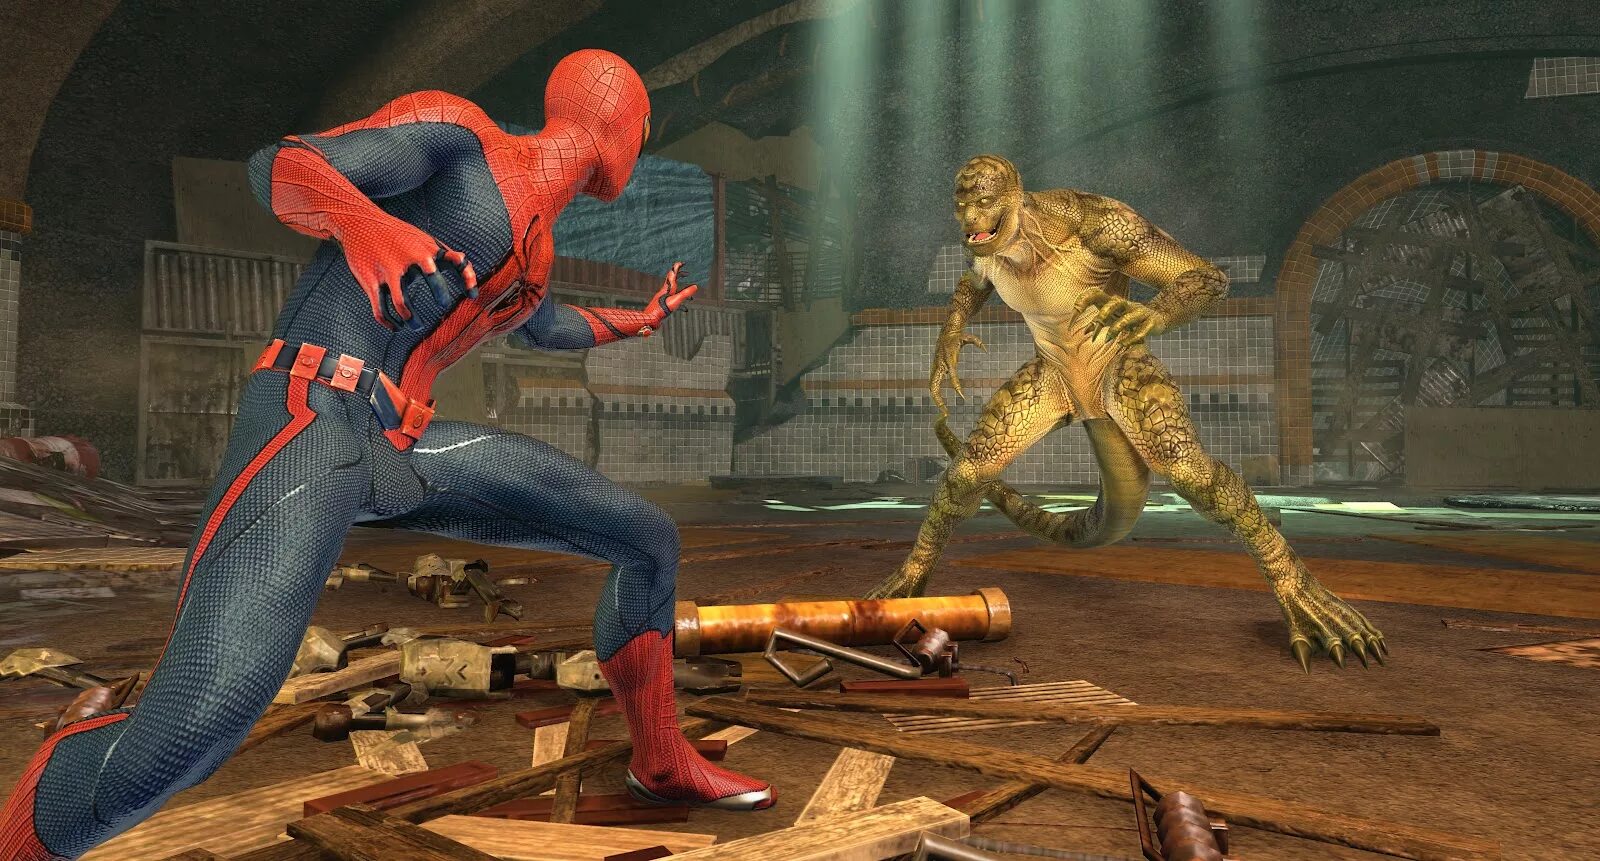 Spider man 2 ящер. Spider-man (игра, 2000). Скорпион человек паук игра. Amazing Spider man игра ящер. Игра босс пауков